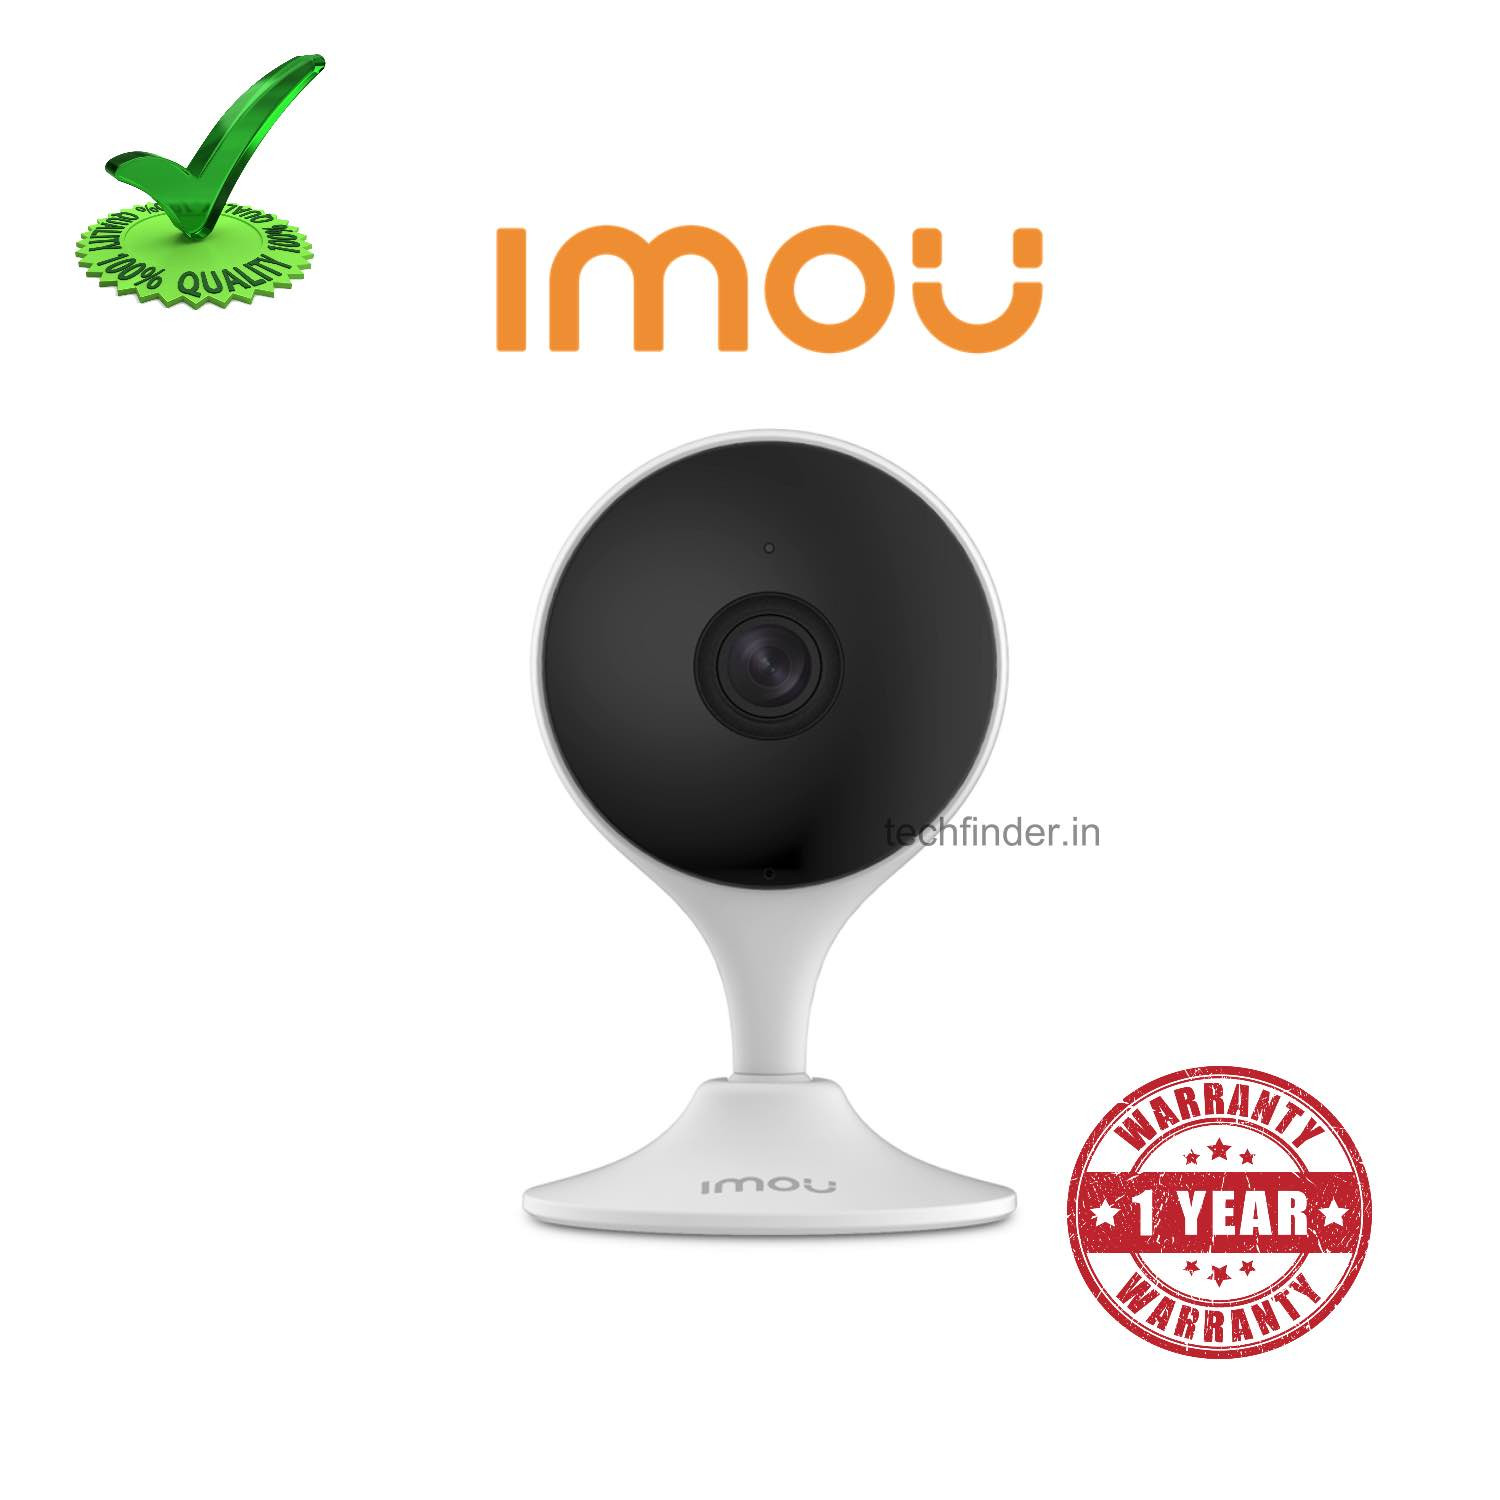 Imou Cue 2 1080p Vision Wireless Wi-Fi Camera